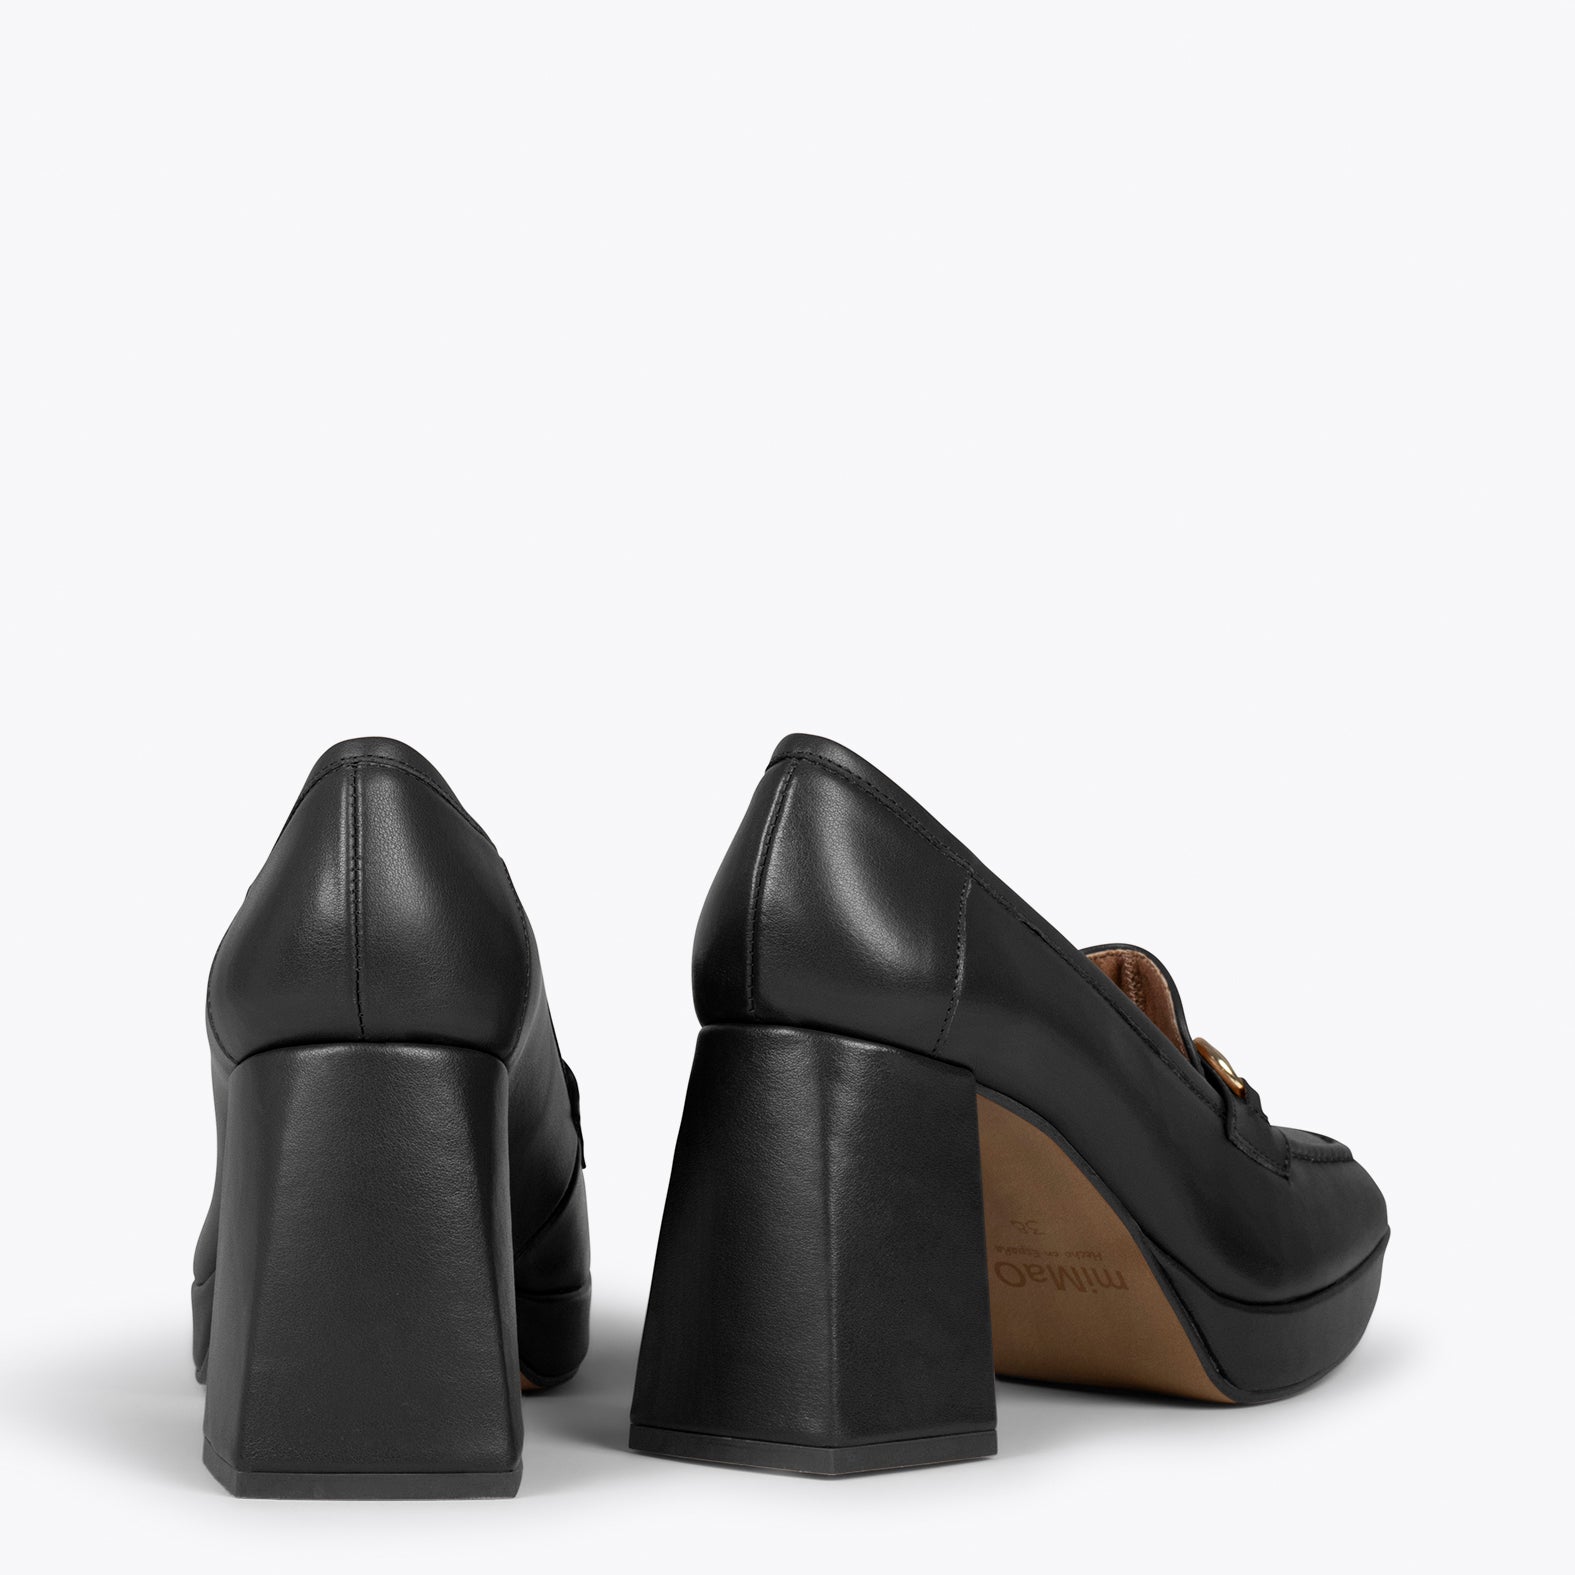 ANNETTE – BLACK moccasins with block heel and platform